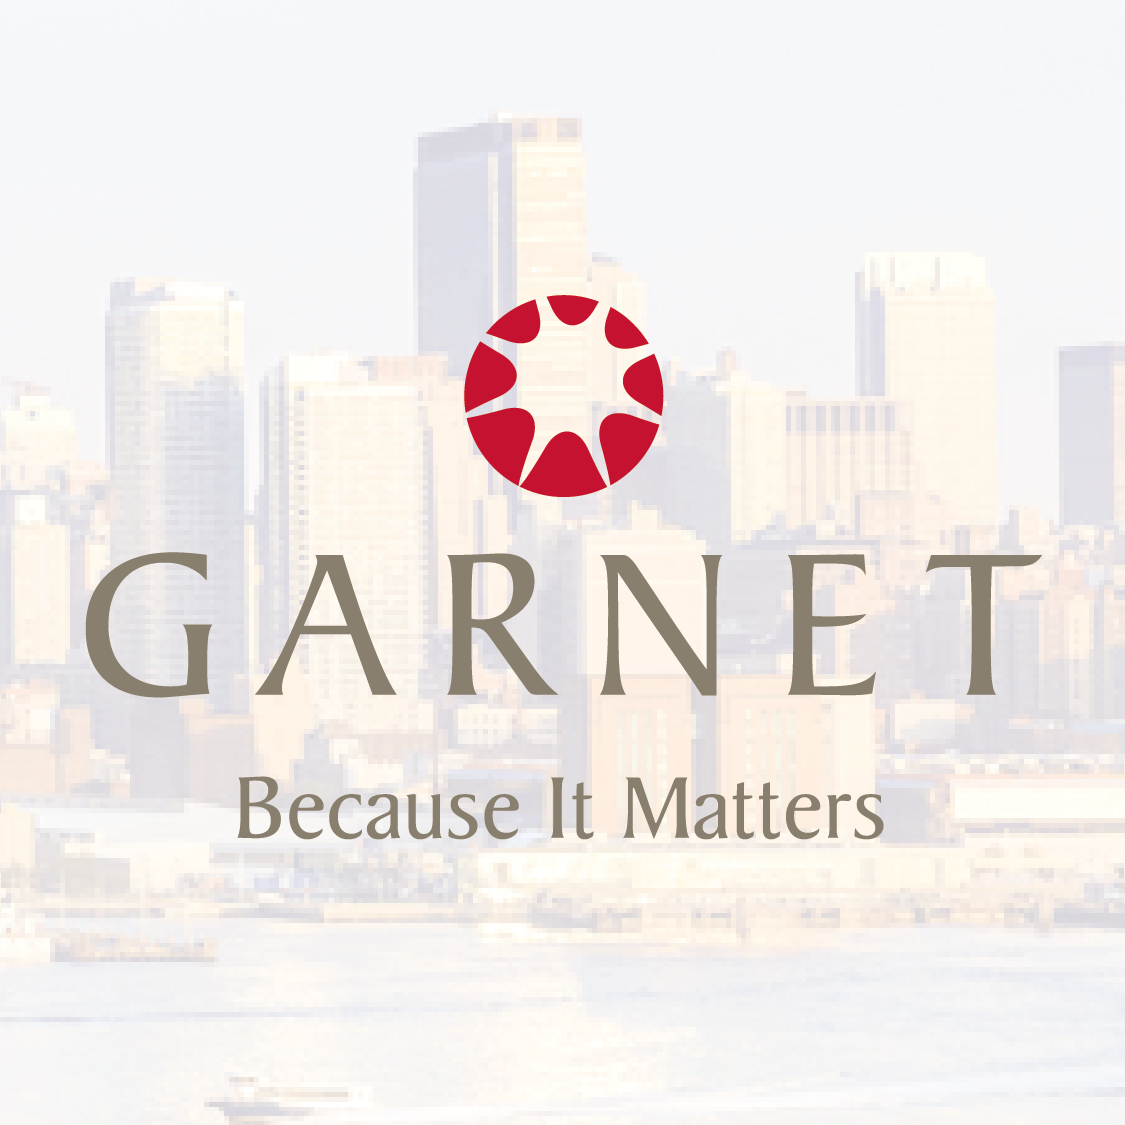 Photo of Garnet Capital Advisors in Harrison City, New York, United States - 2 Picture of Point of interest, Establishment, Finance